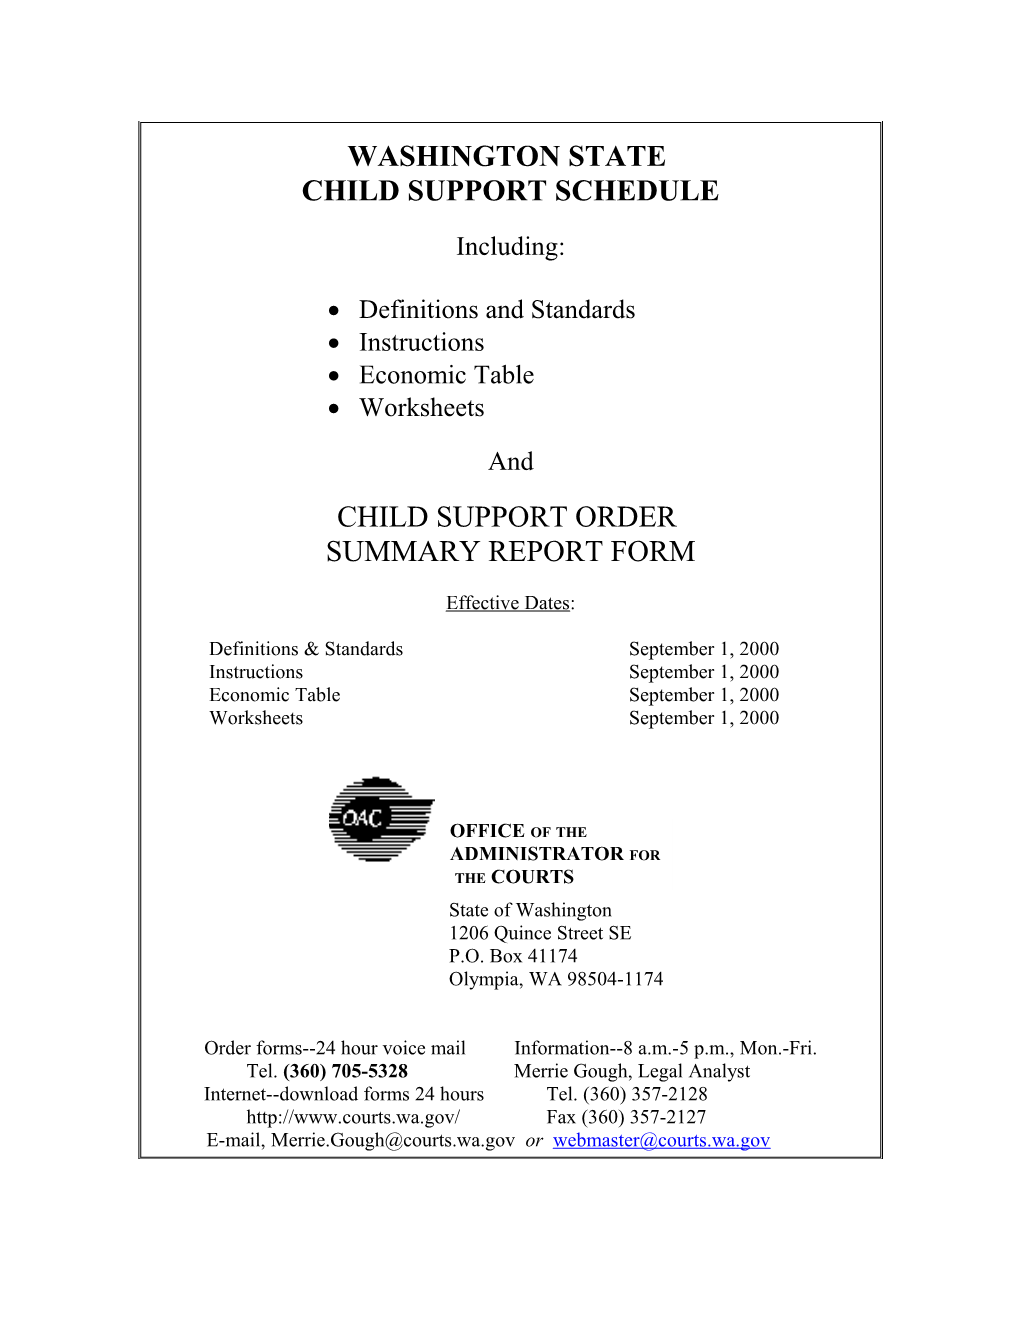 Child Support Hotline, State DSHS, 1 (800) 442-KIDS